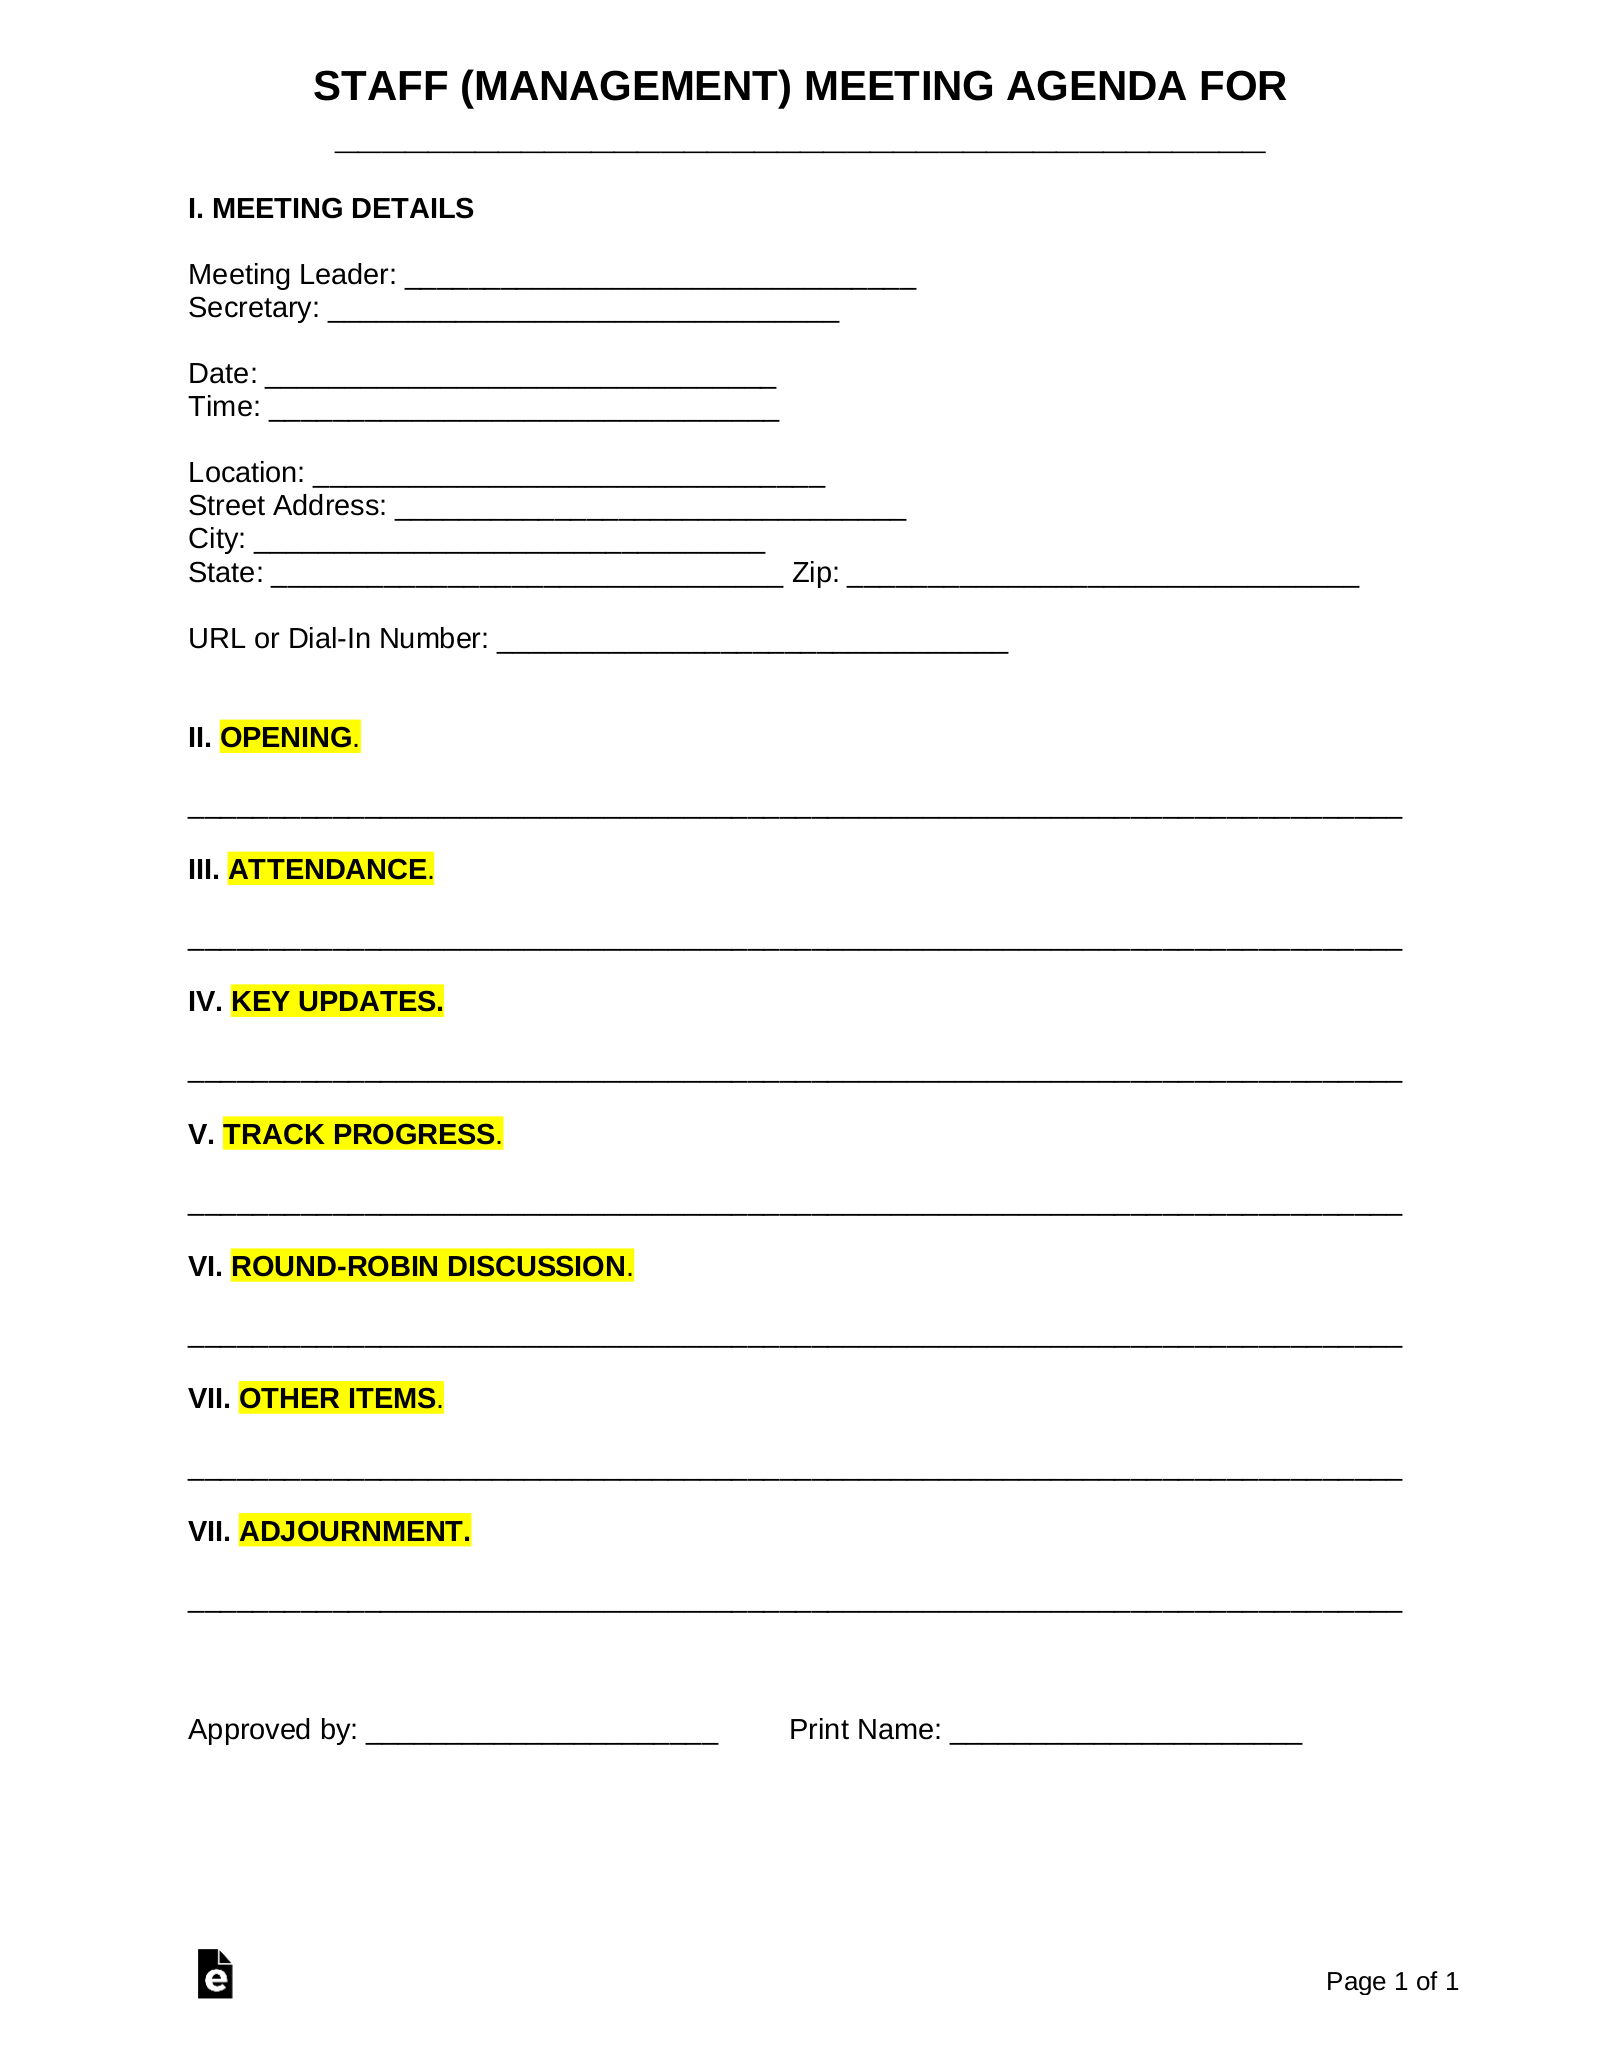 free-staff-management-meeting-agenda-template-sample-pdf-word-eforms